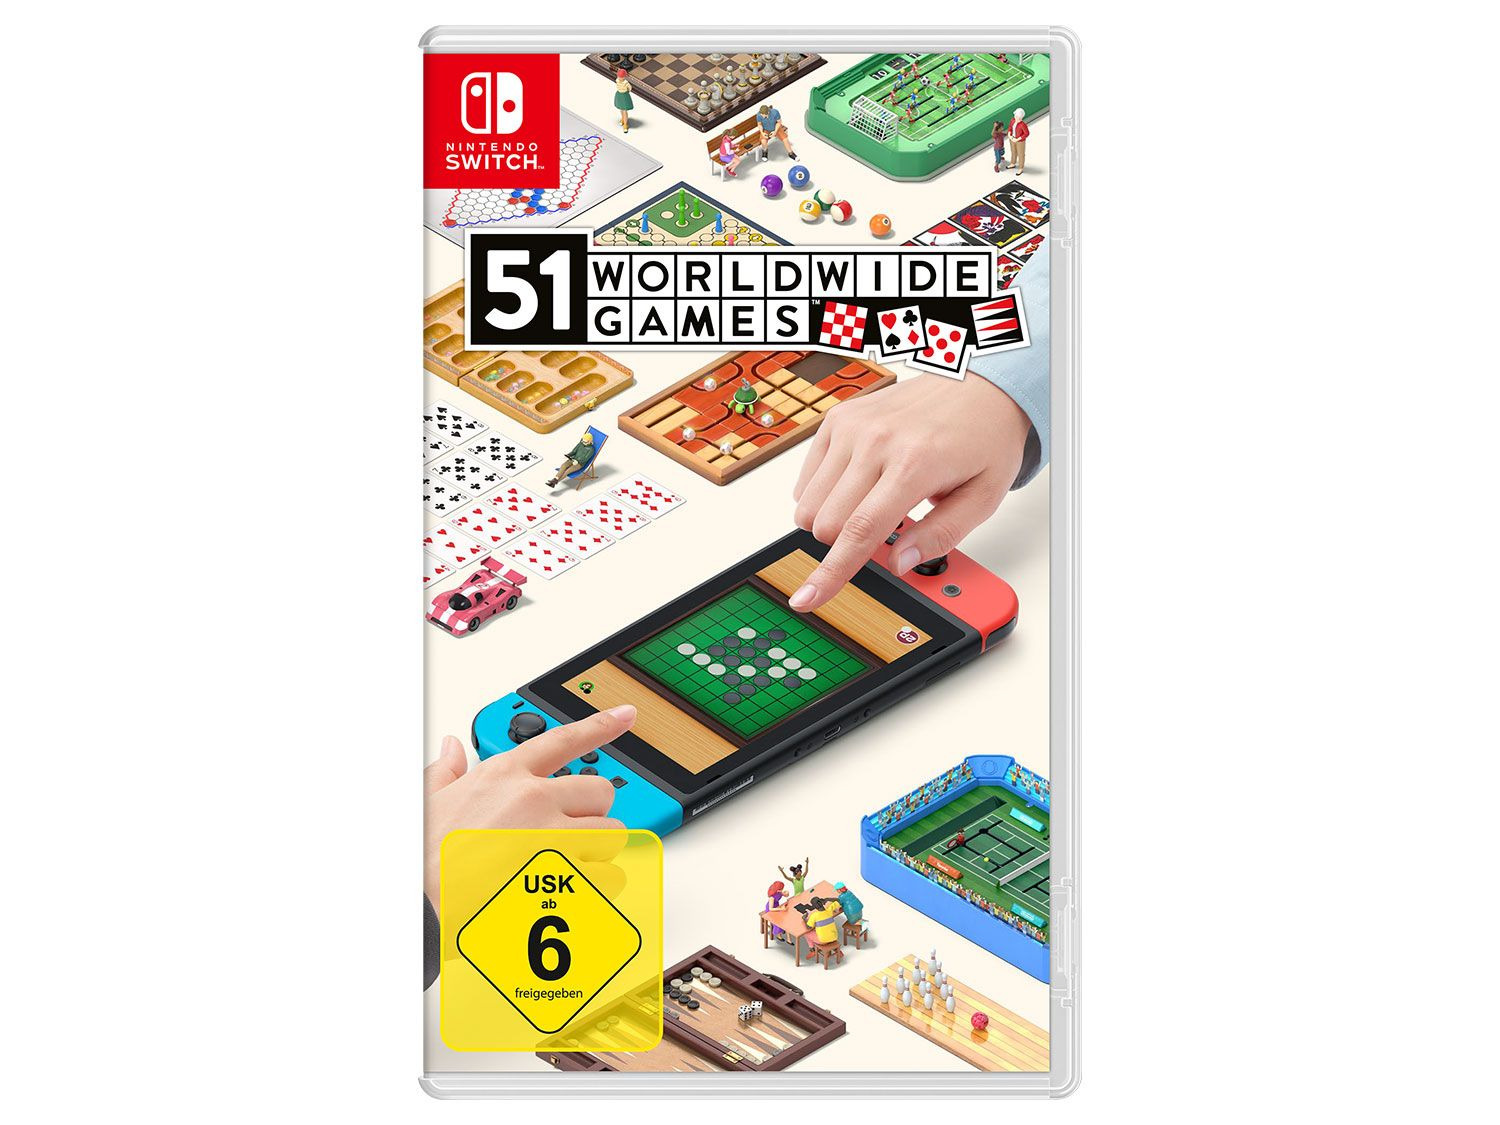 51 Switch Nintendo Worldwide Games